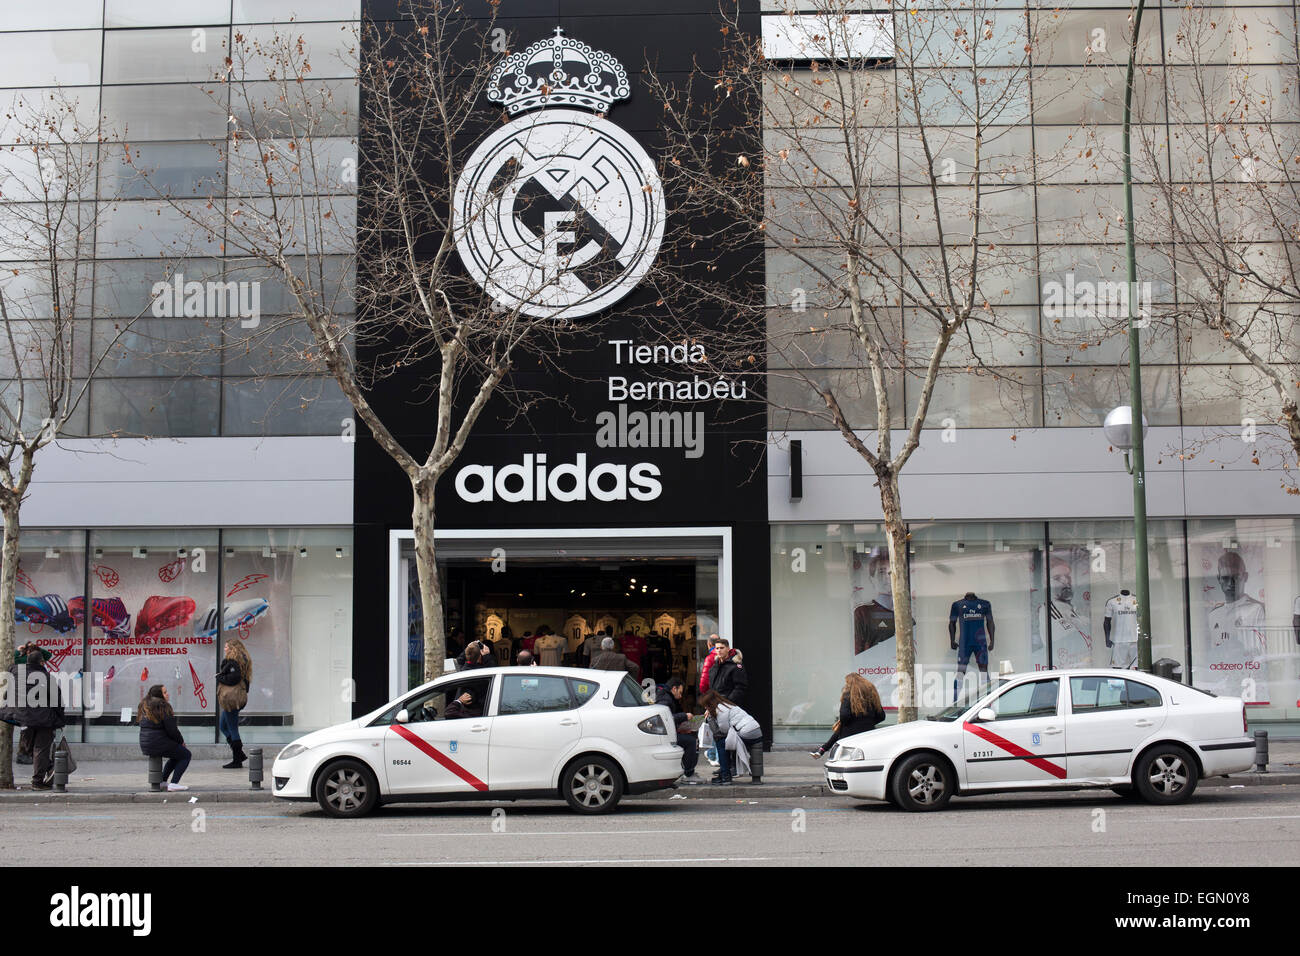 Real Madrid stadium Bernabeu club shop football Stock Photo: 79137724 - Alamy1300 x 956